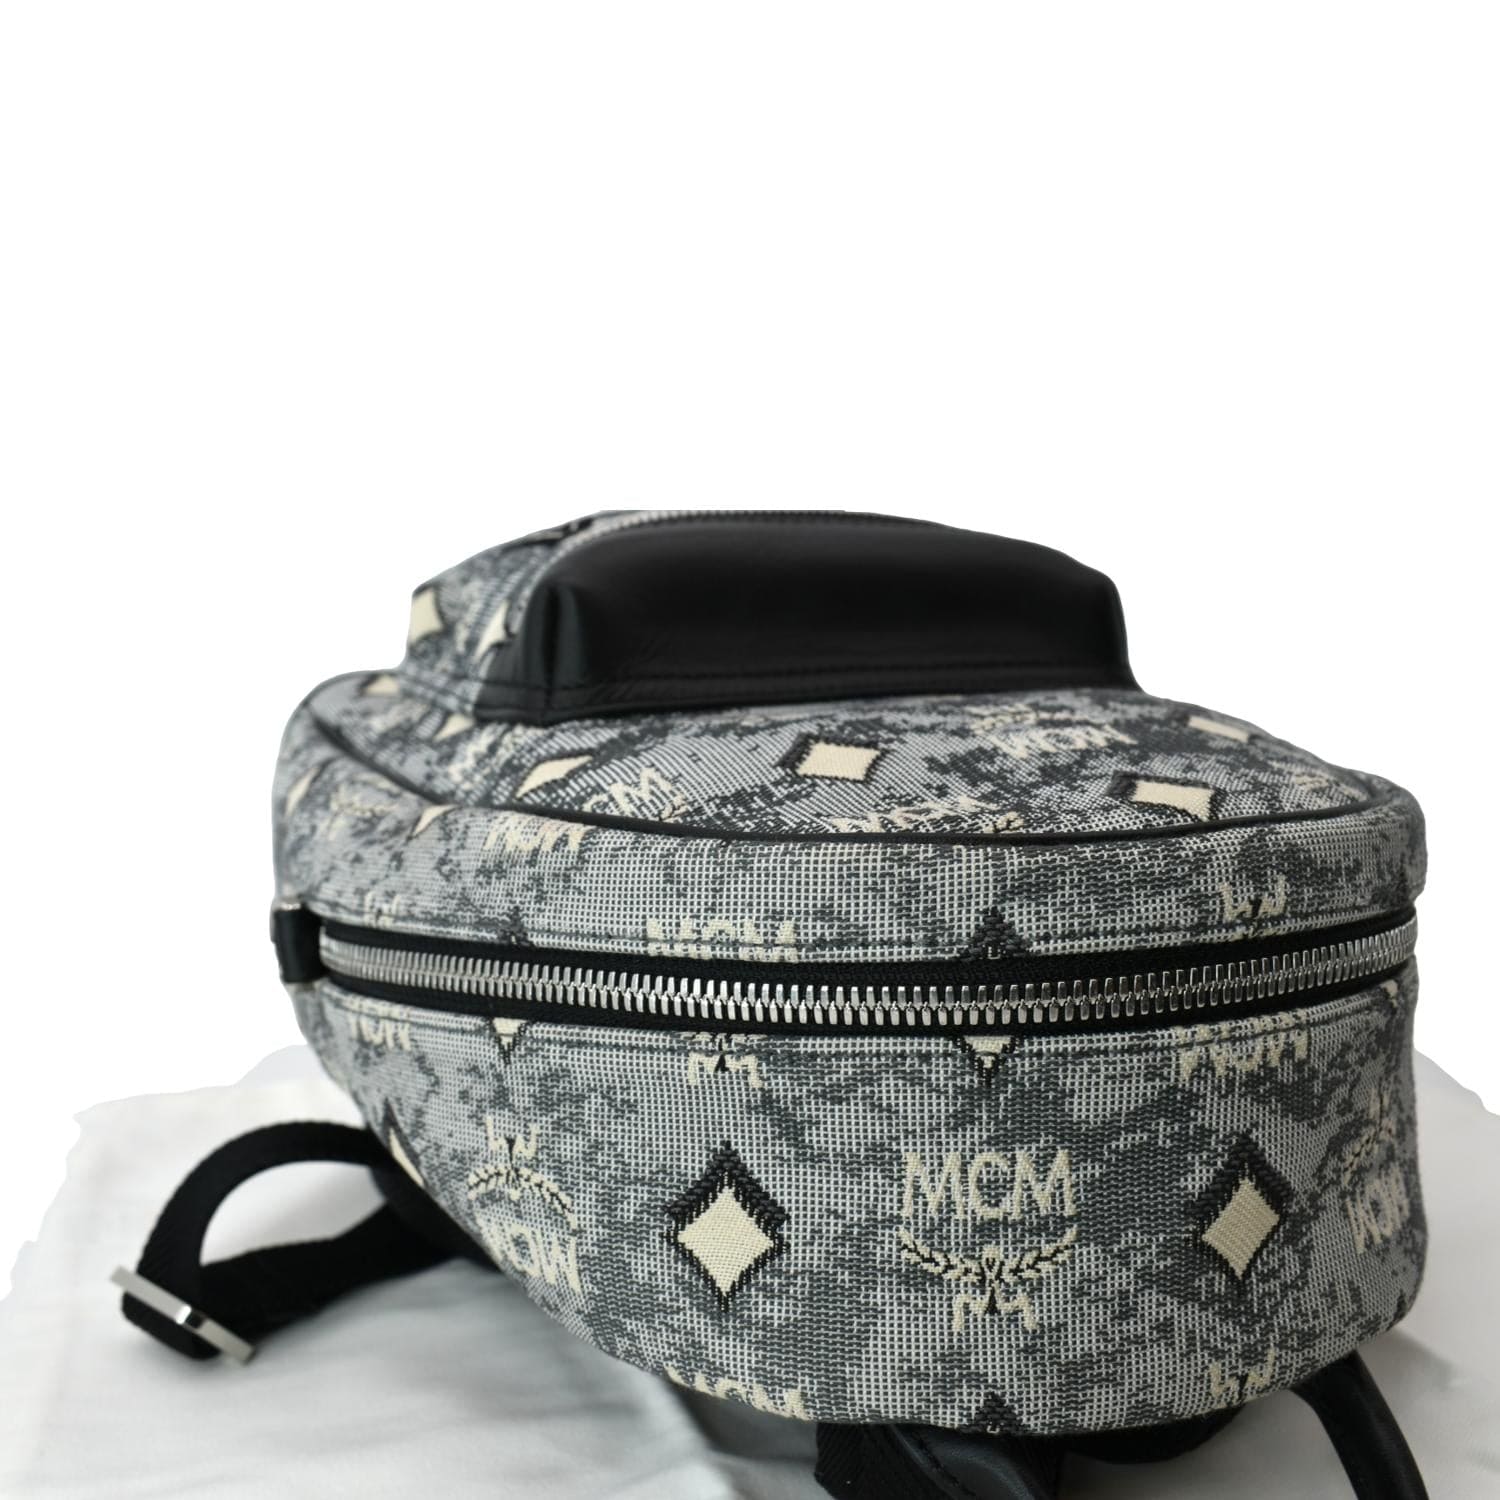 Preloved Sling Bag MCM made in Korea